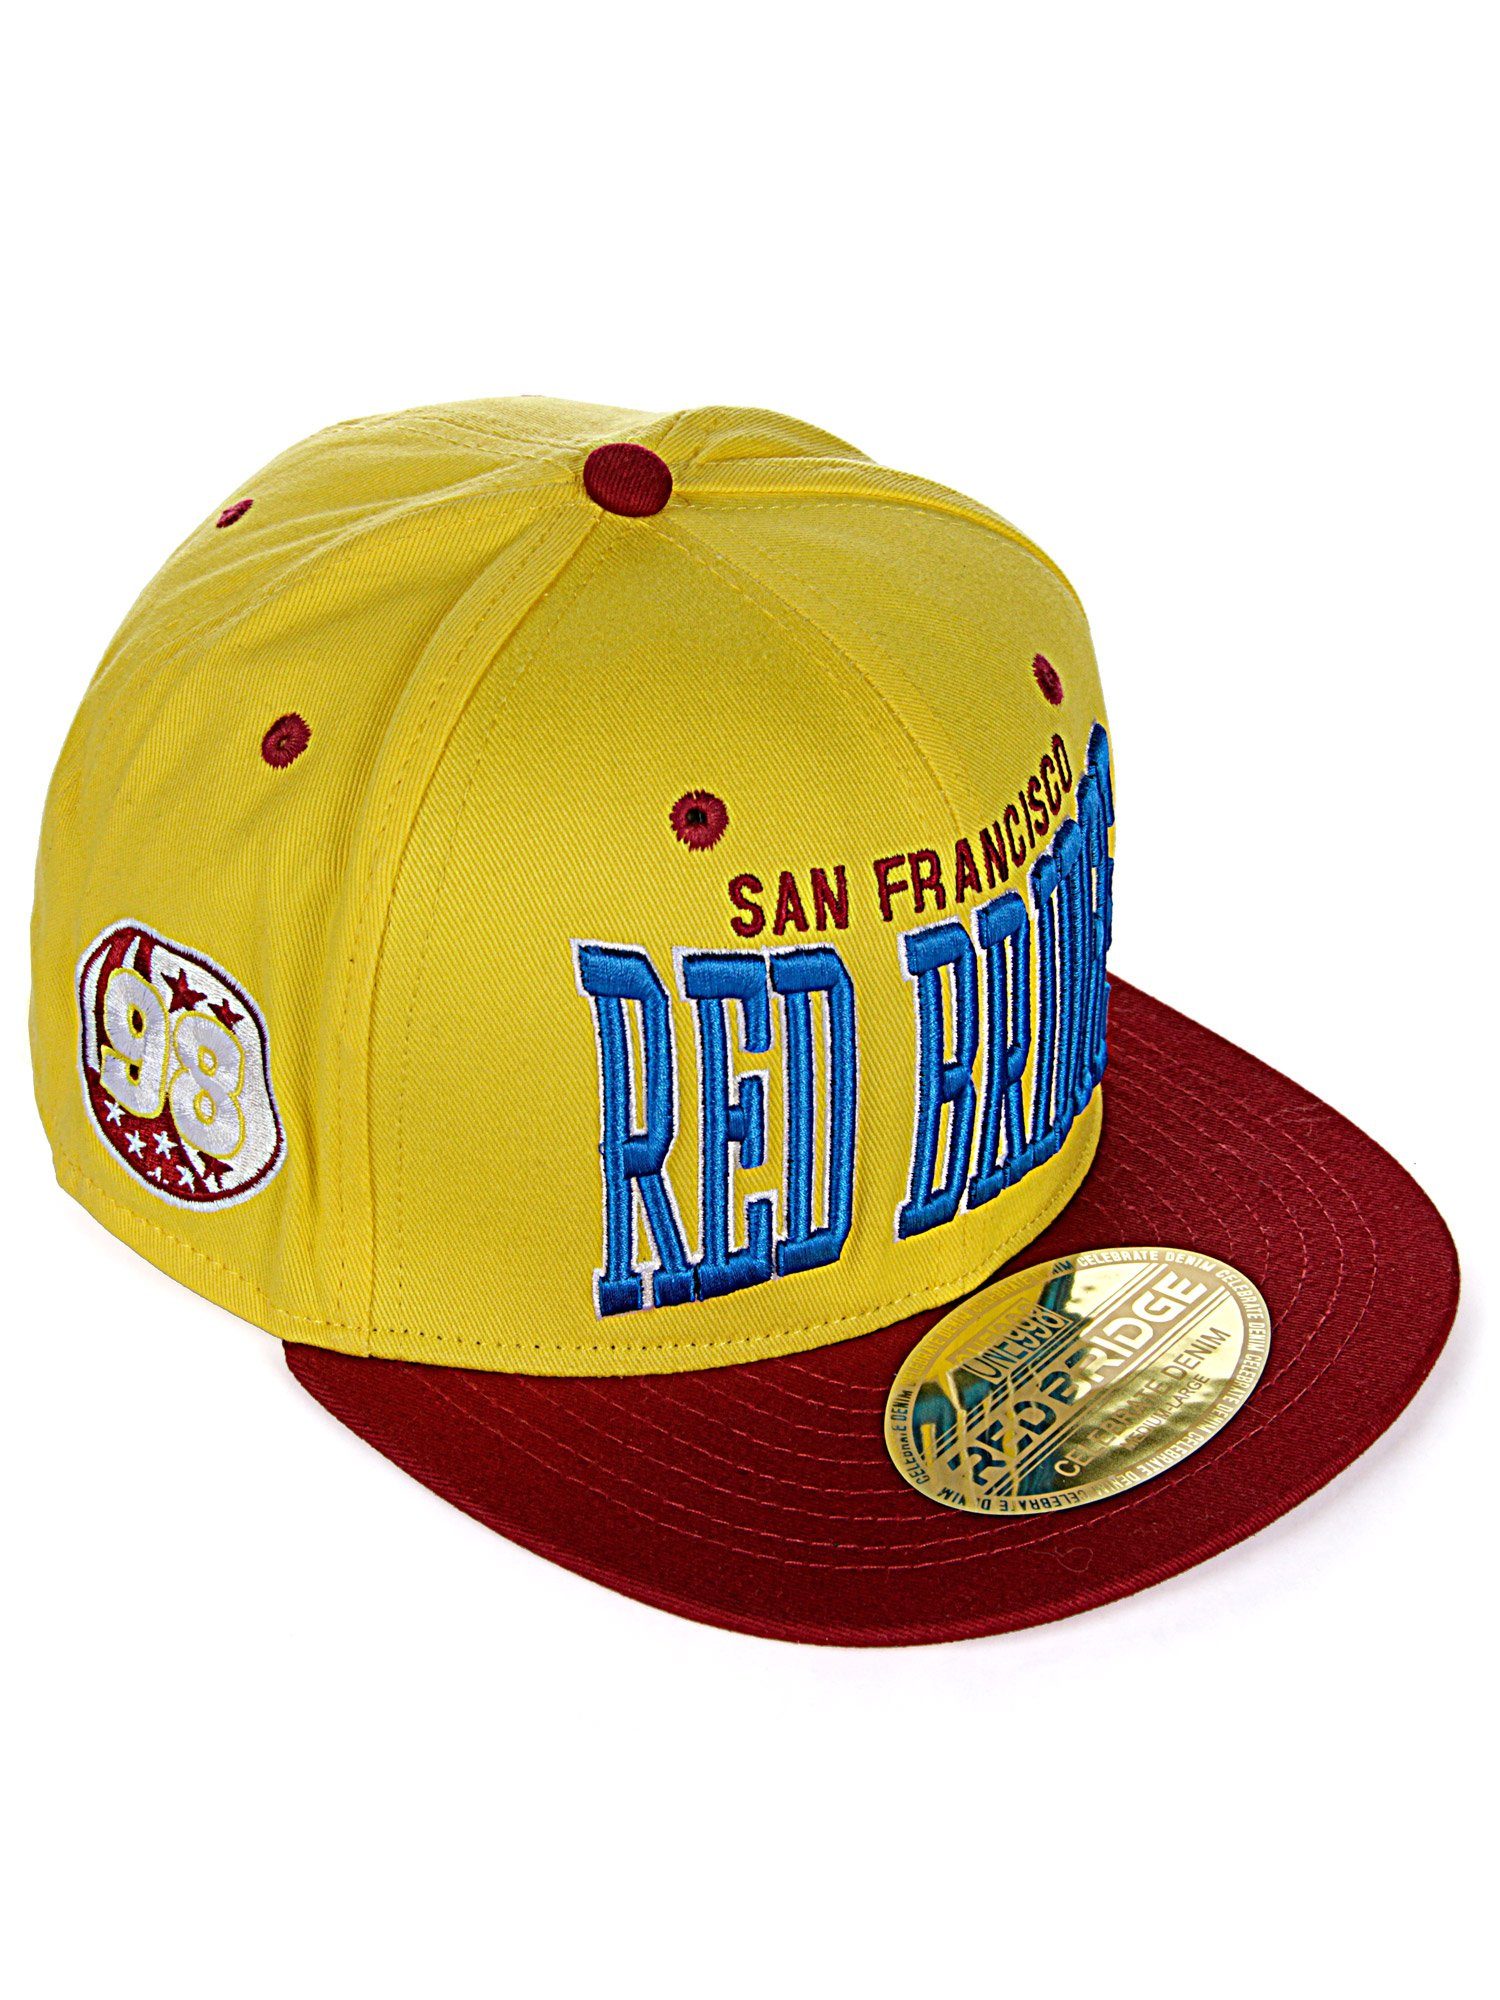 RedBridge Baseball Cap gelb-rot mit Durham Schirm kontrastfarbigem